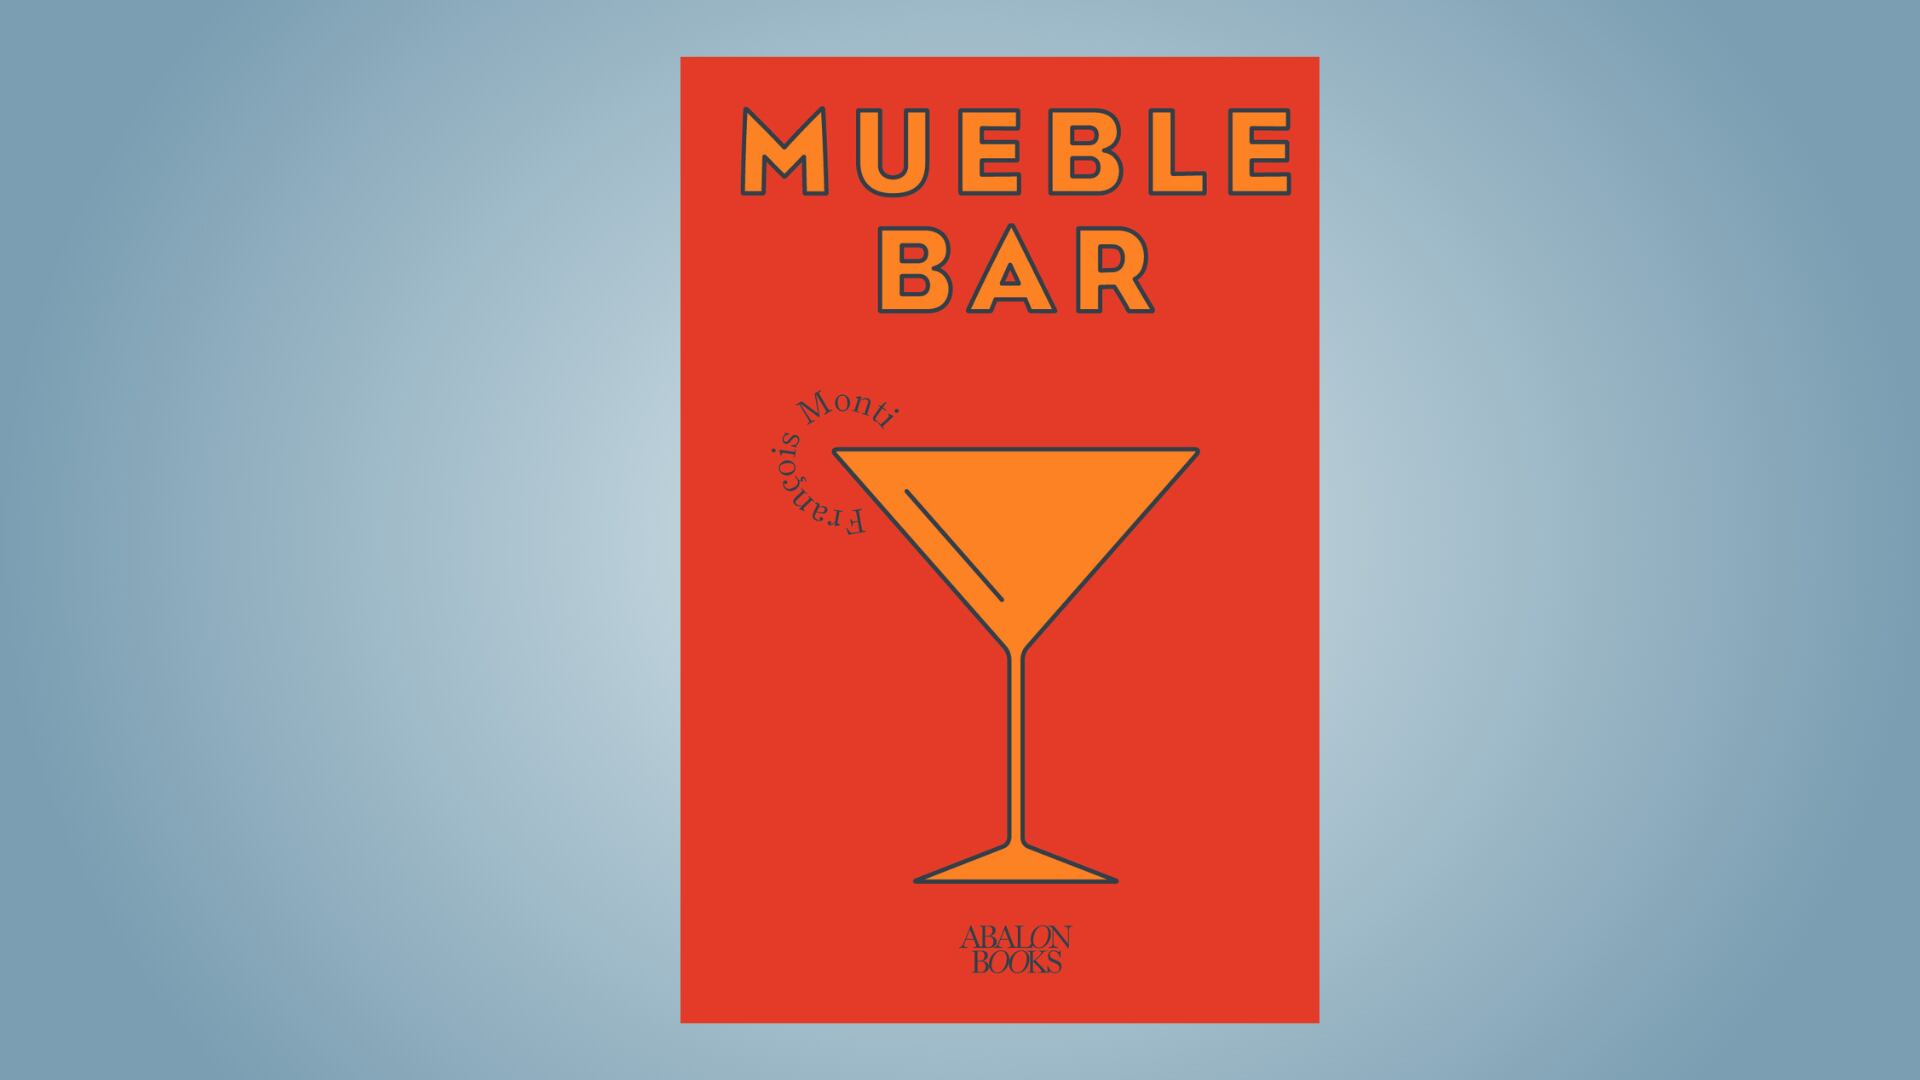 Portada de Mueble Bar, de François Monti (Abalon Books).